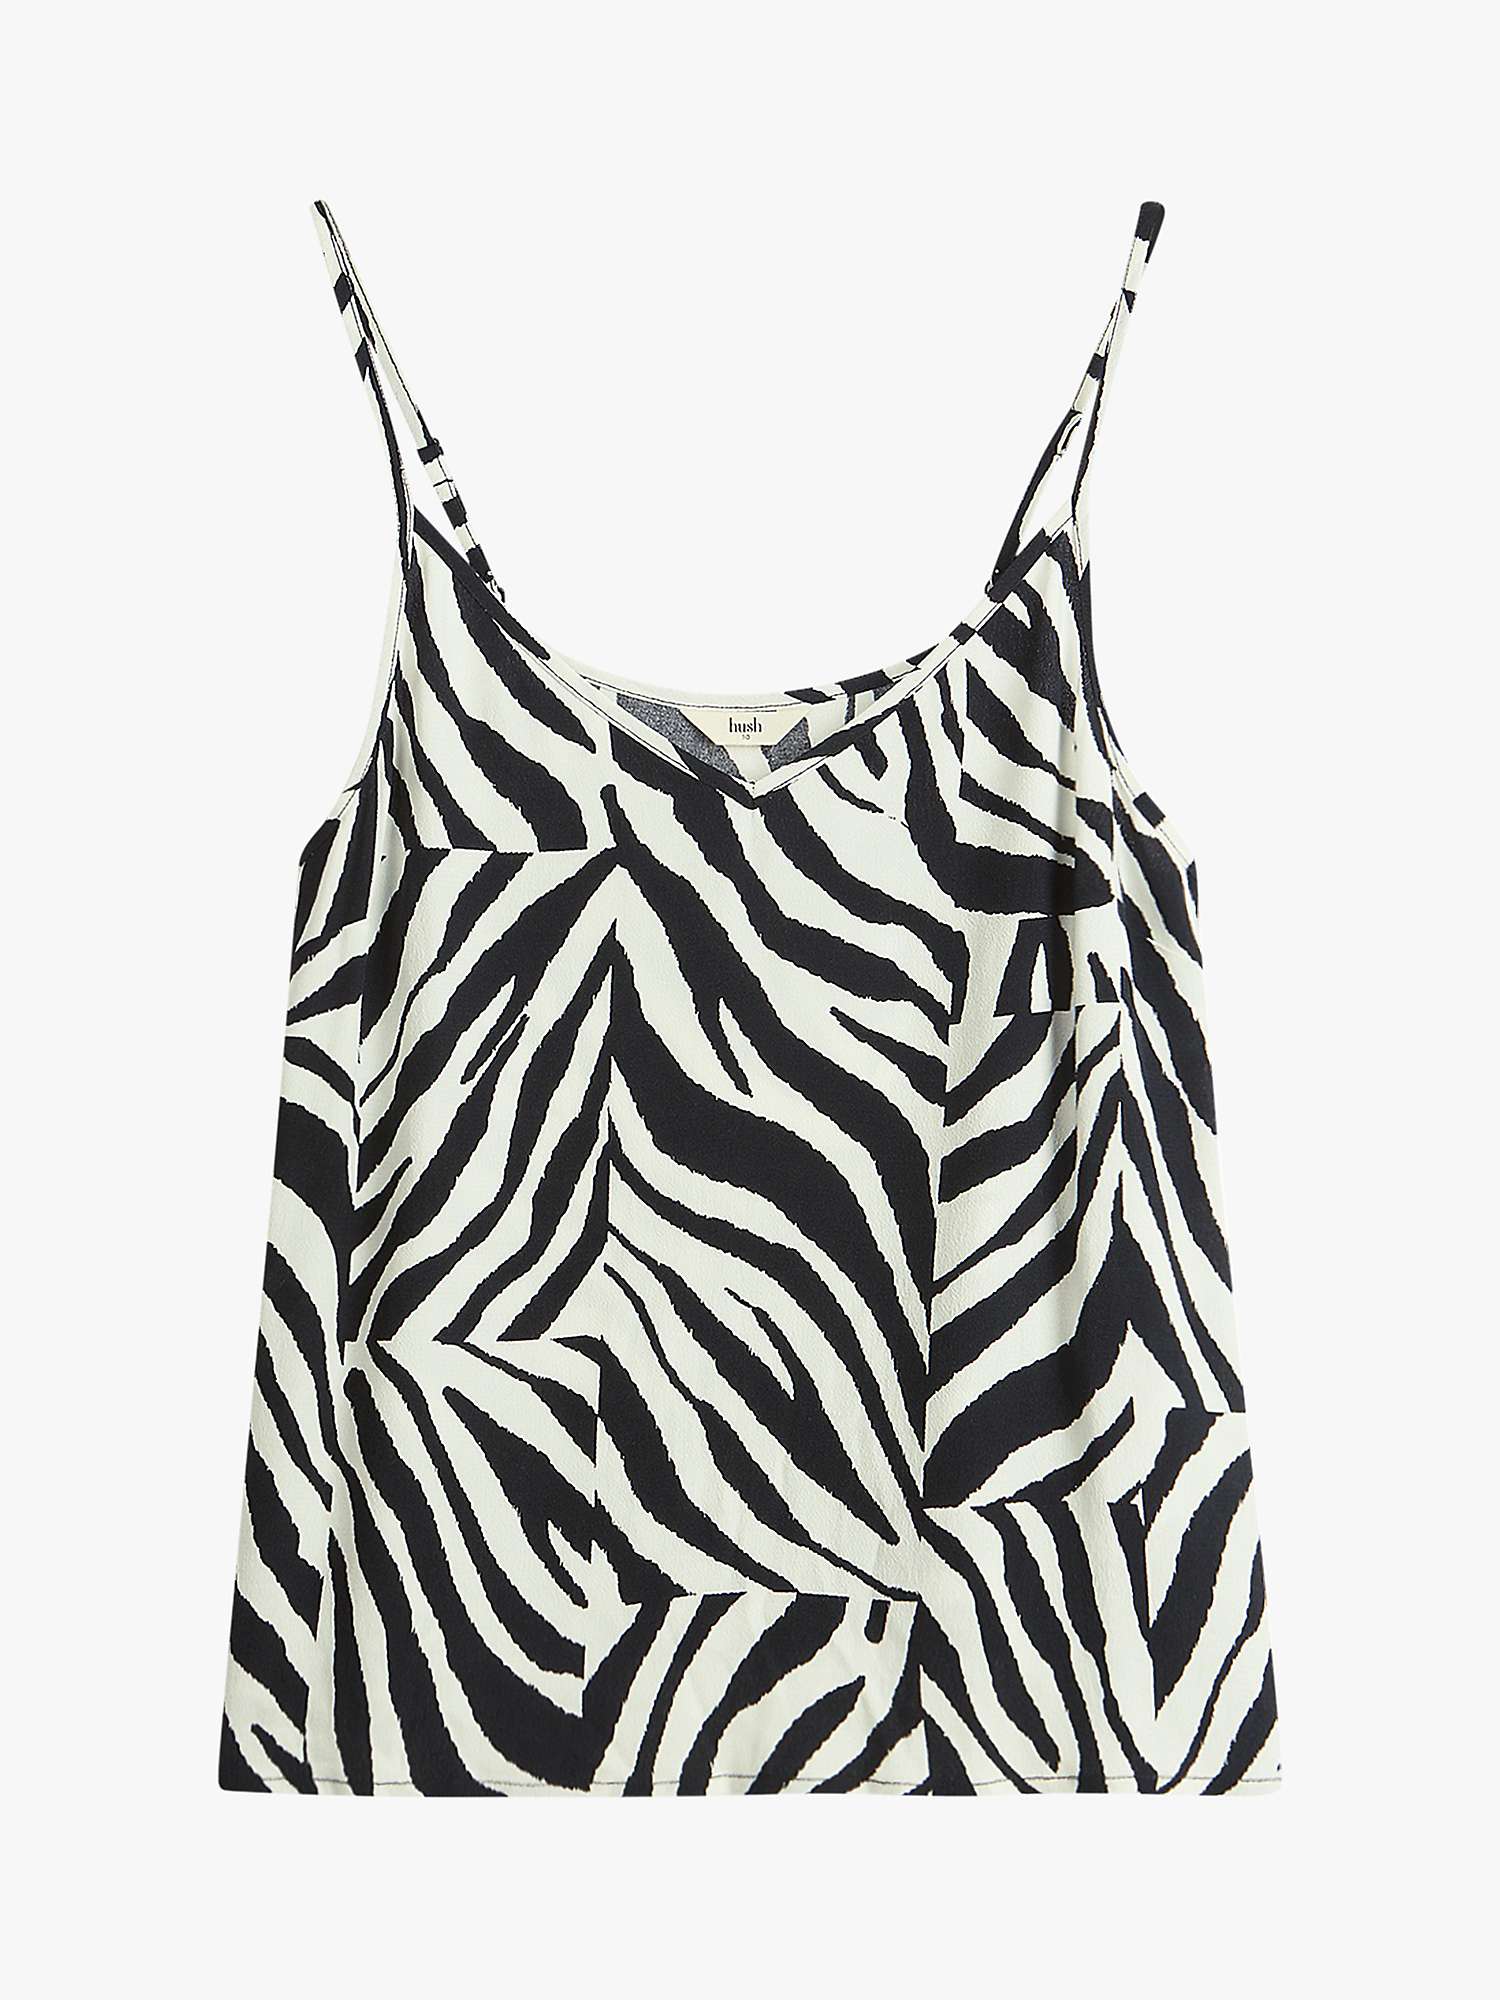 Buy HUSH Zebra Patchwork Camisole, Black/White Online at johnlewis.com